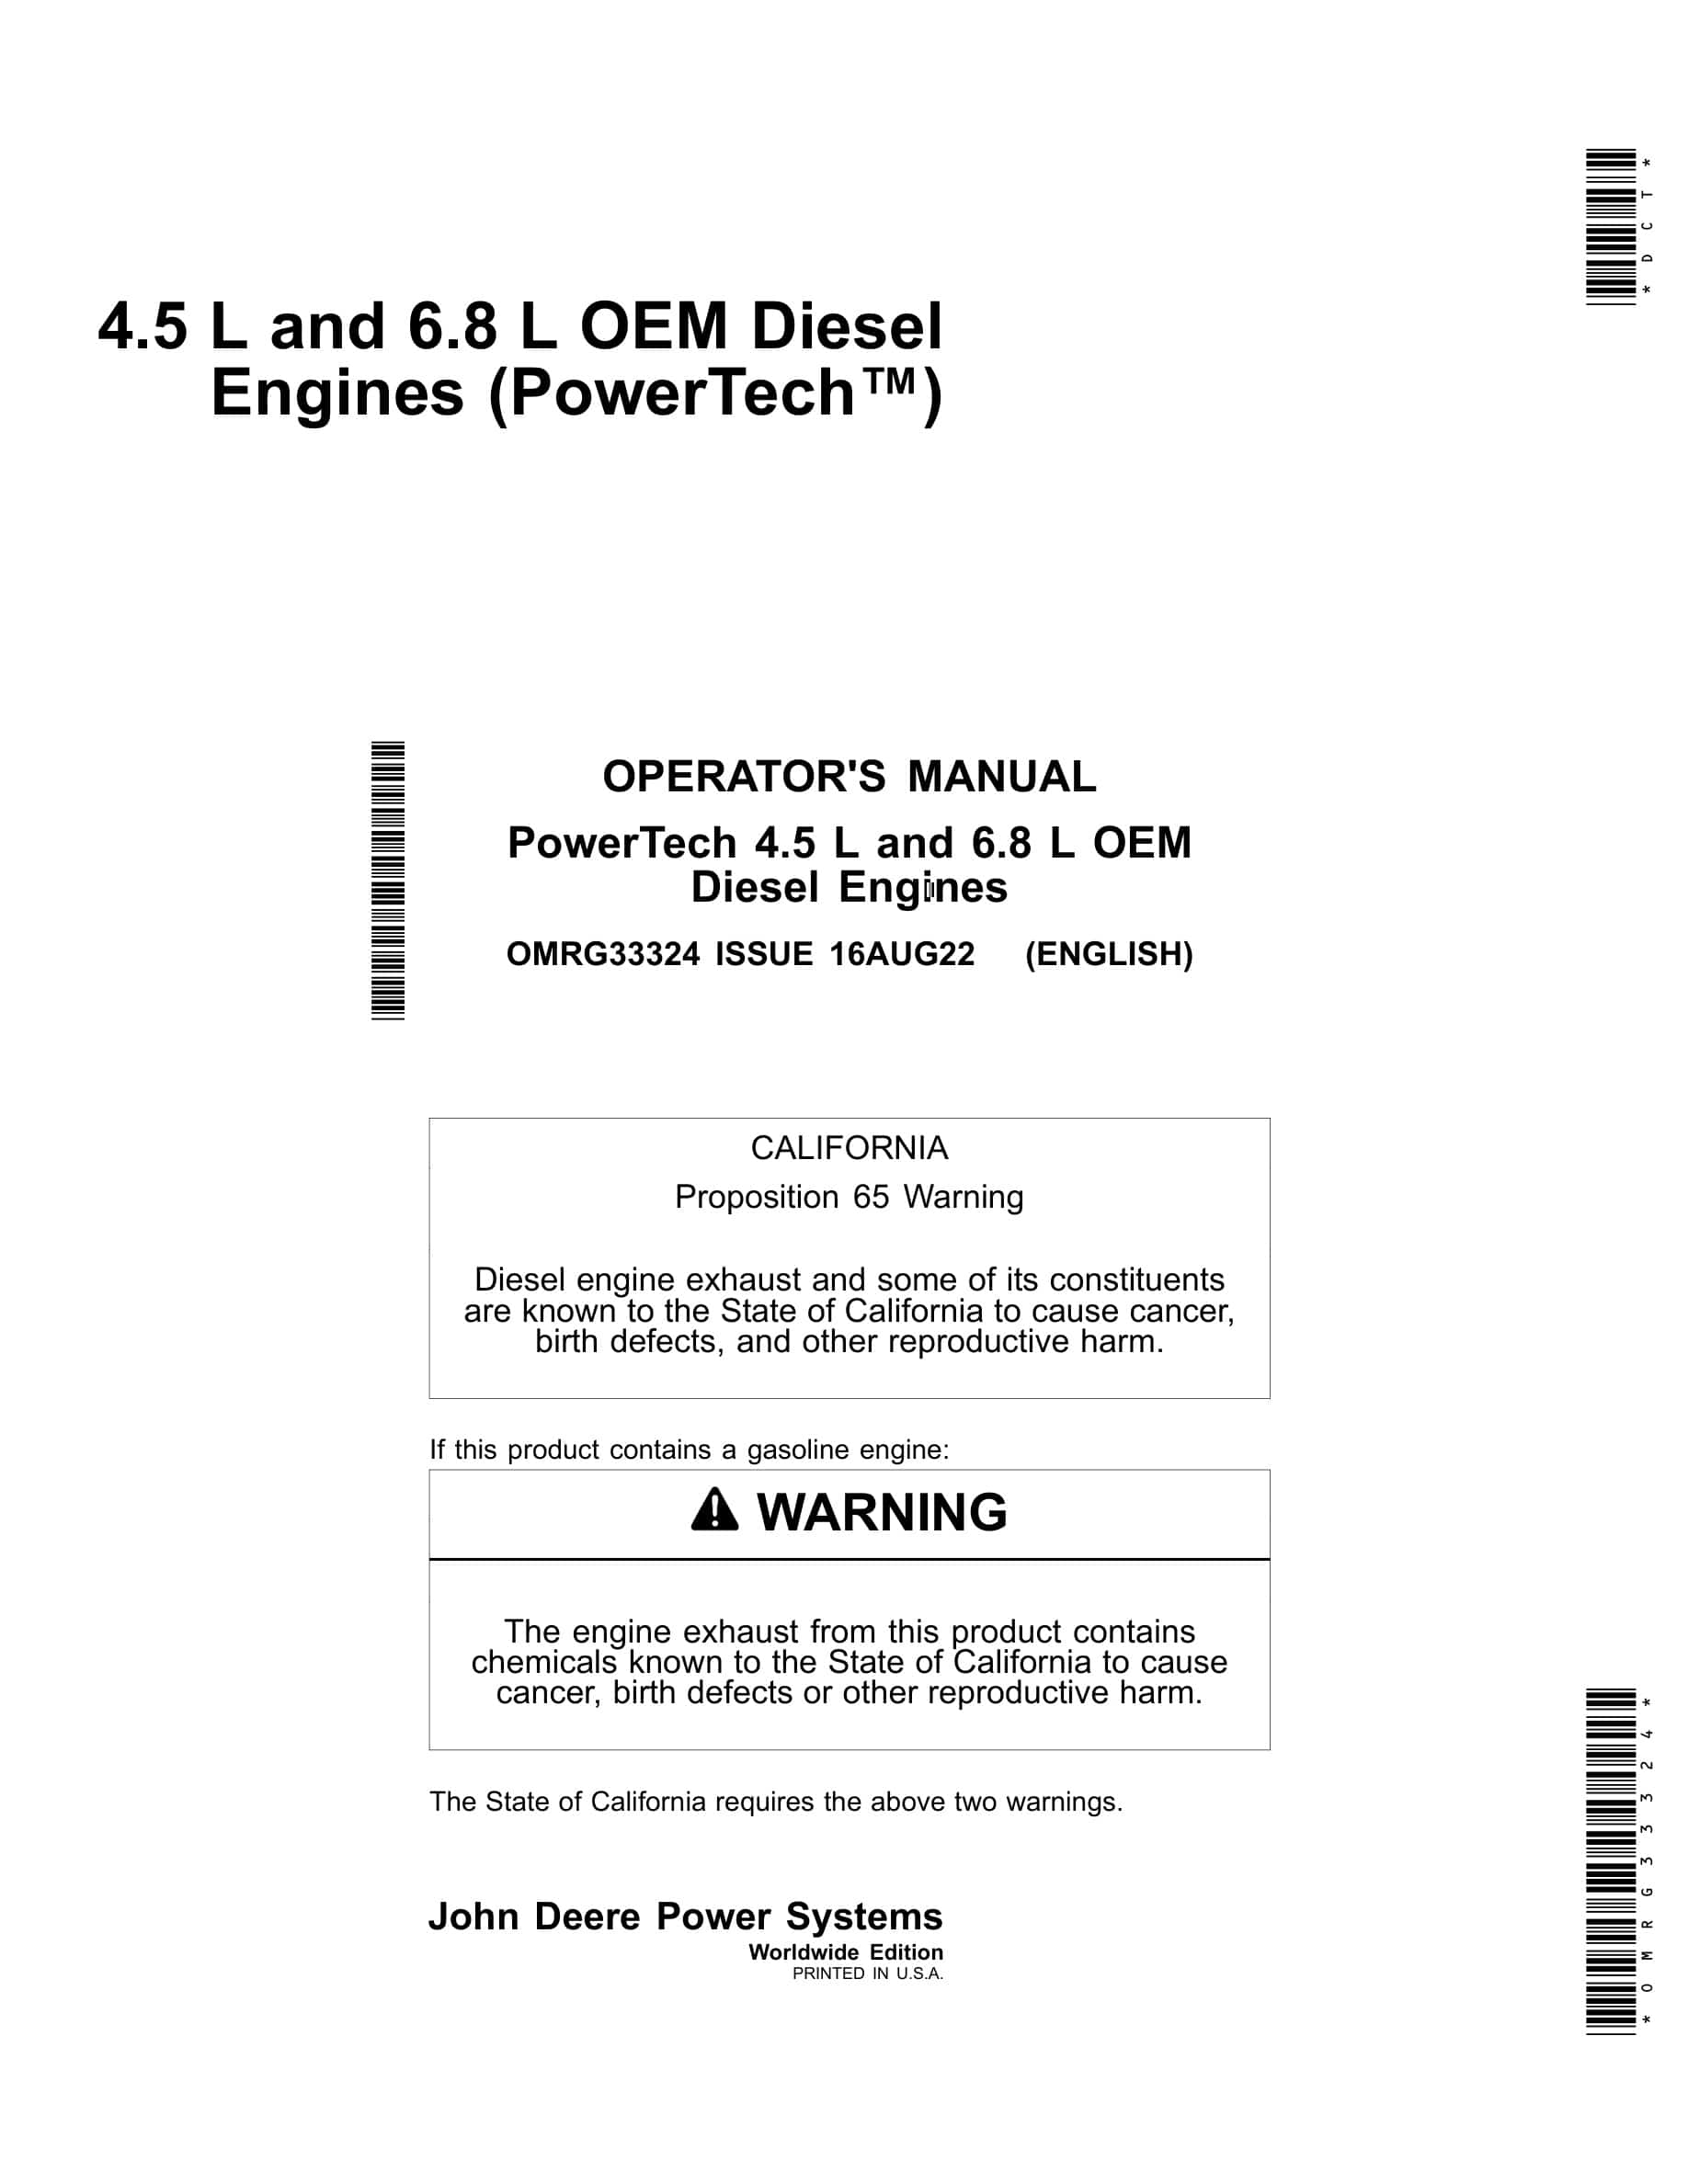 John Deere PowerTech PowerTech 4.5 L and 6.8 L OEM Diesel Engines Operator Manual OMRG33324-1